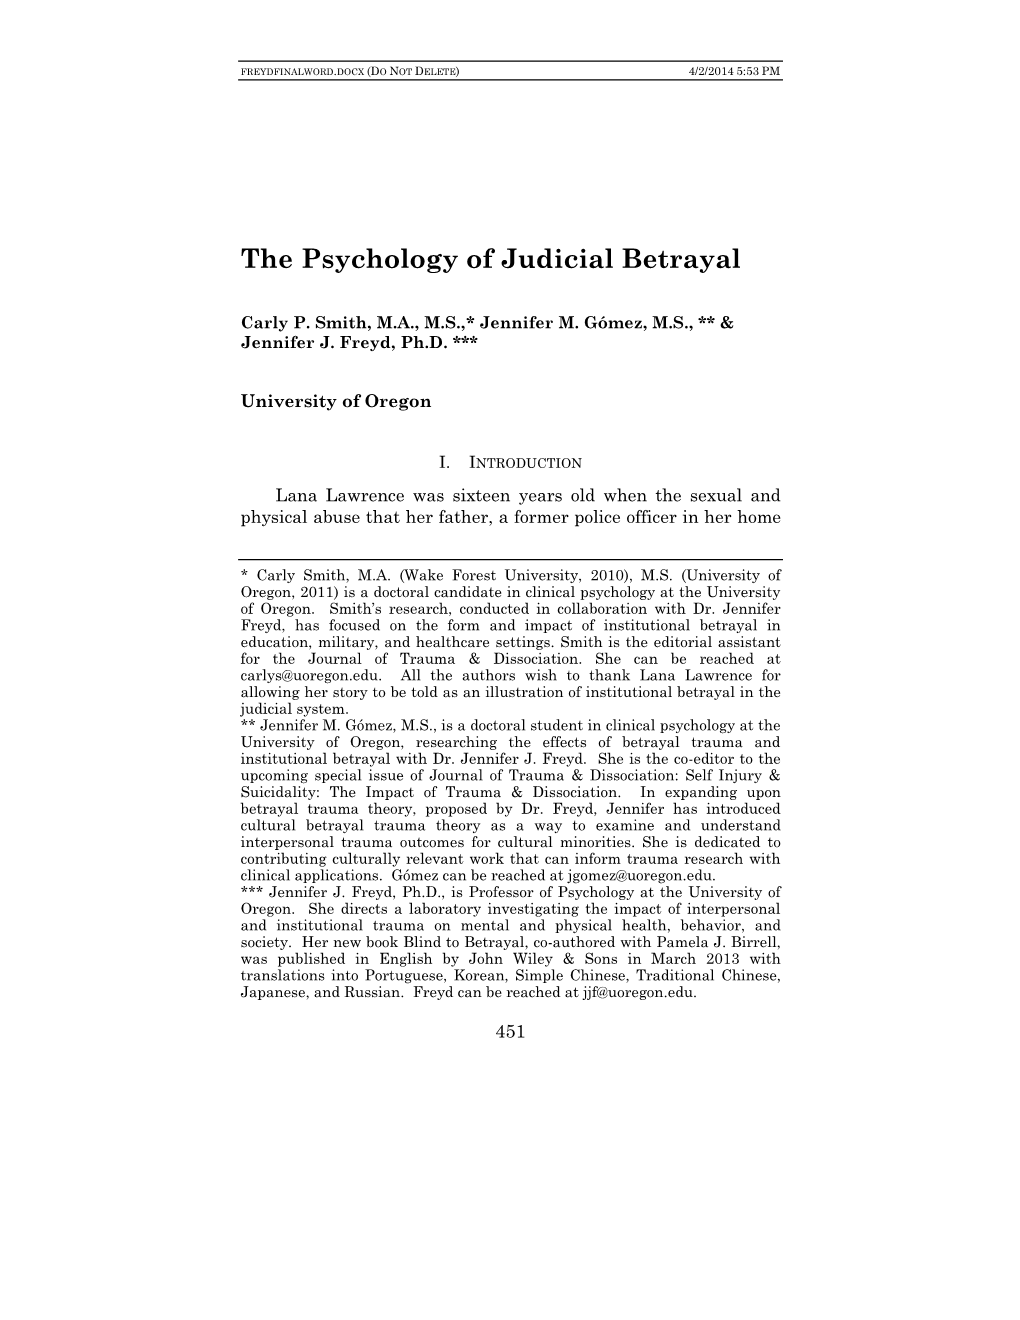 The Psychology of Judicial Betrayal